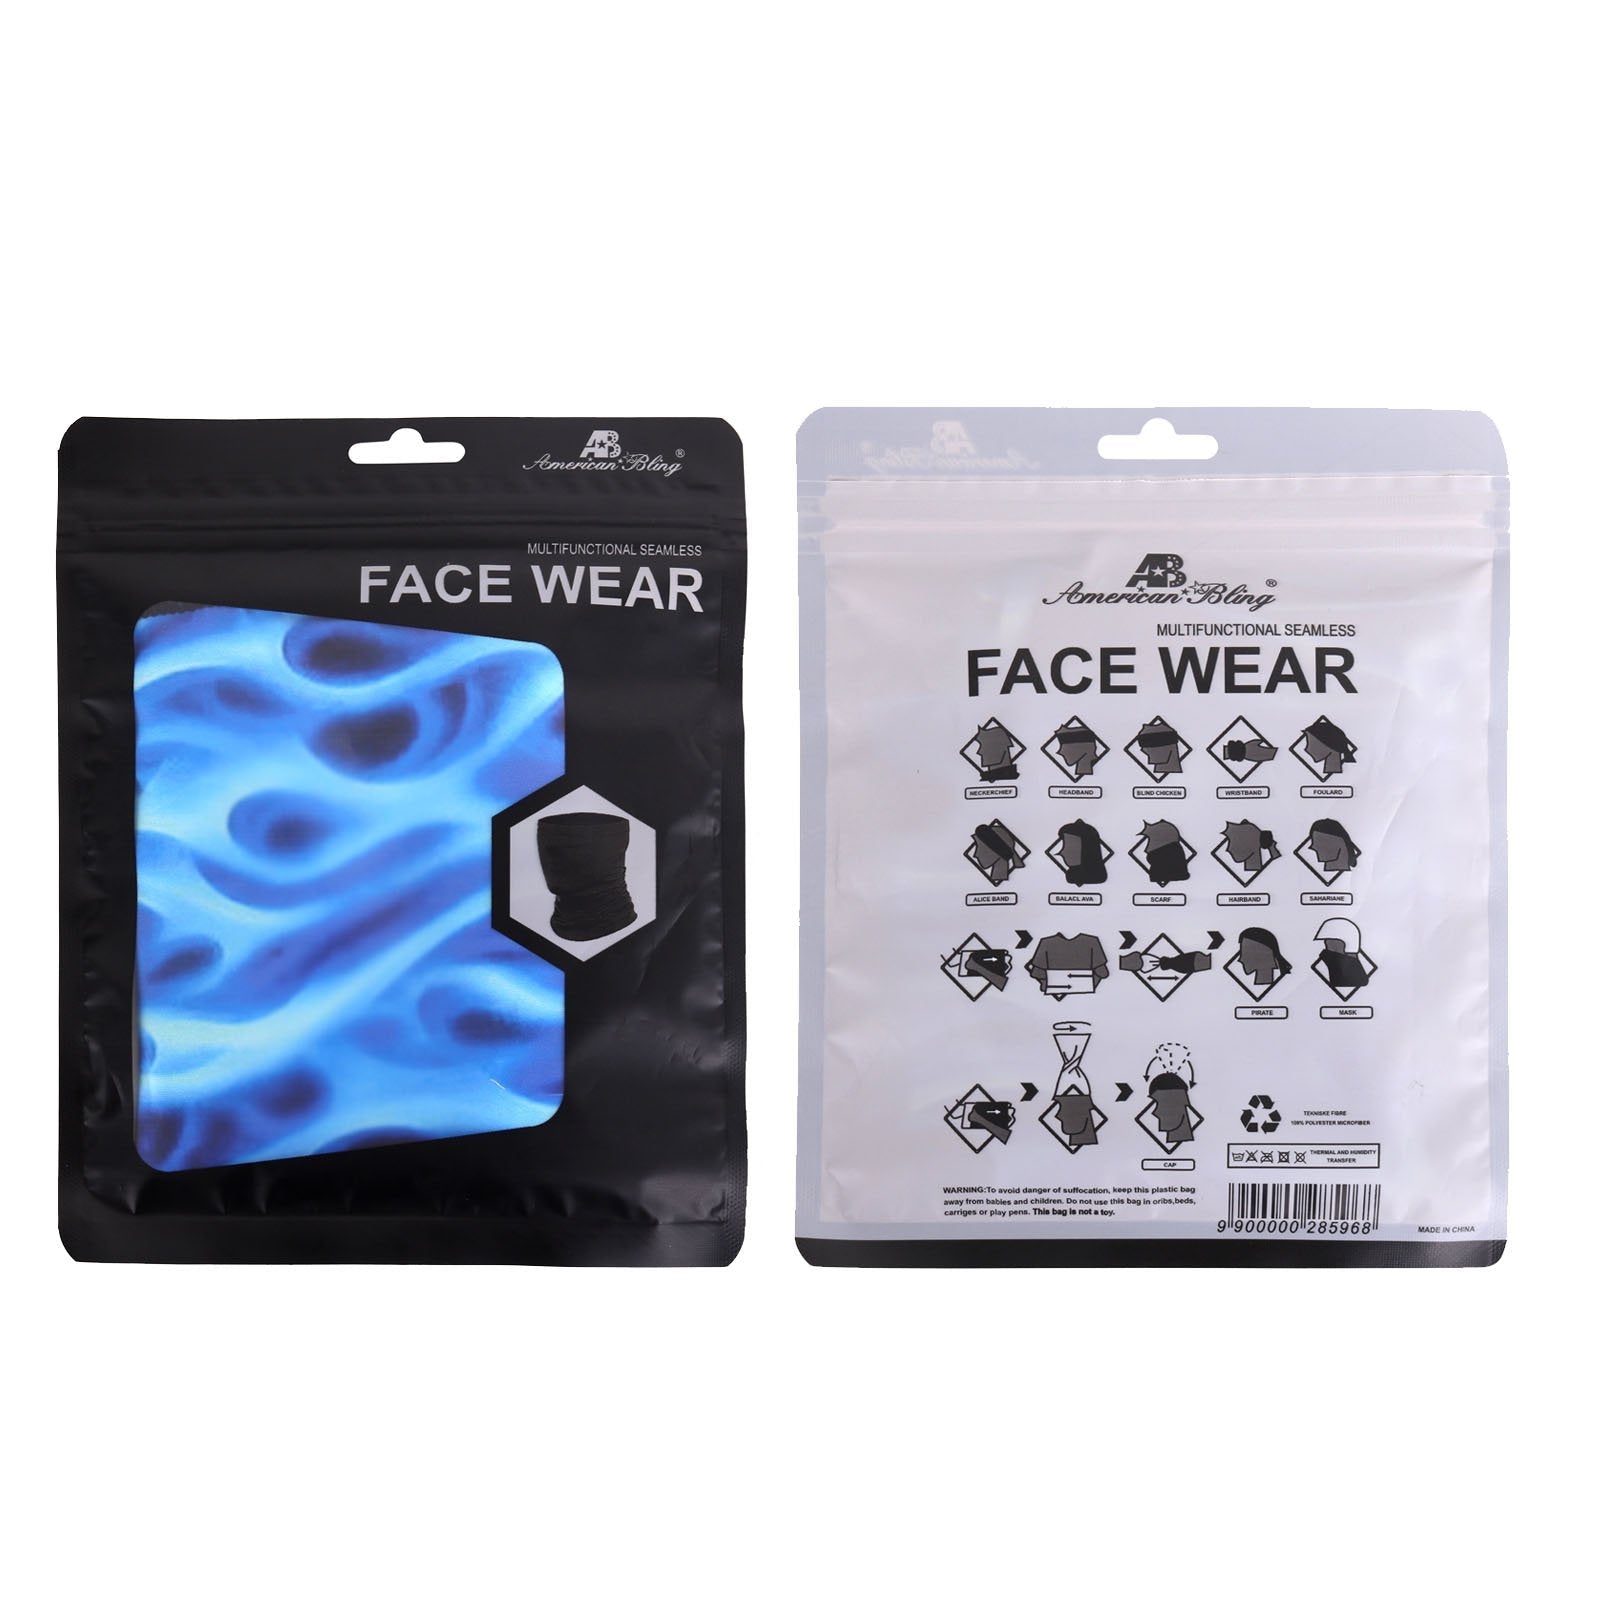 Neck Gaiter Face Mask Reusable, Washable Bandana /Head Wrap Scarf-1Pcs/Pack - Cowgirl Wear